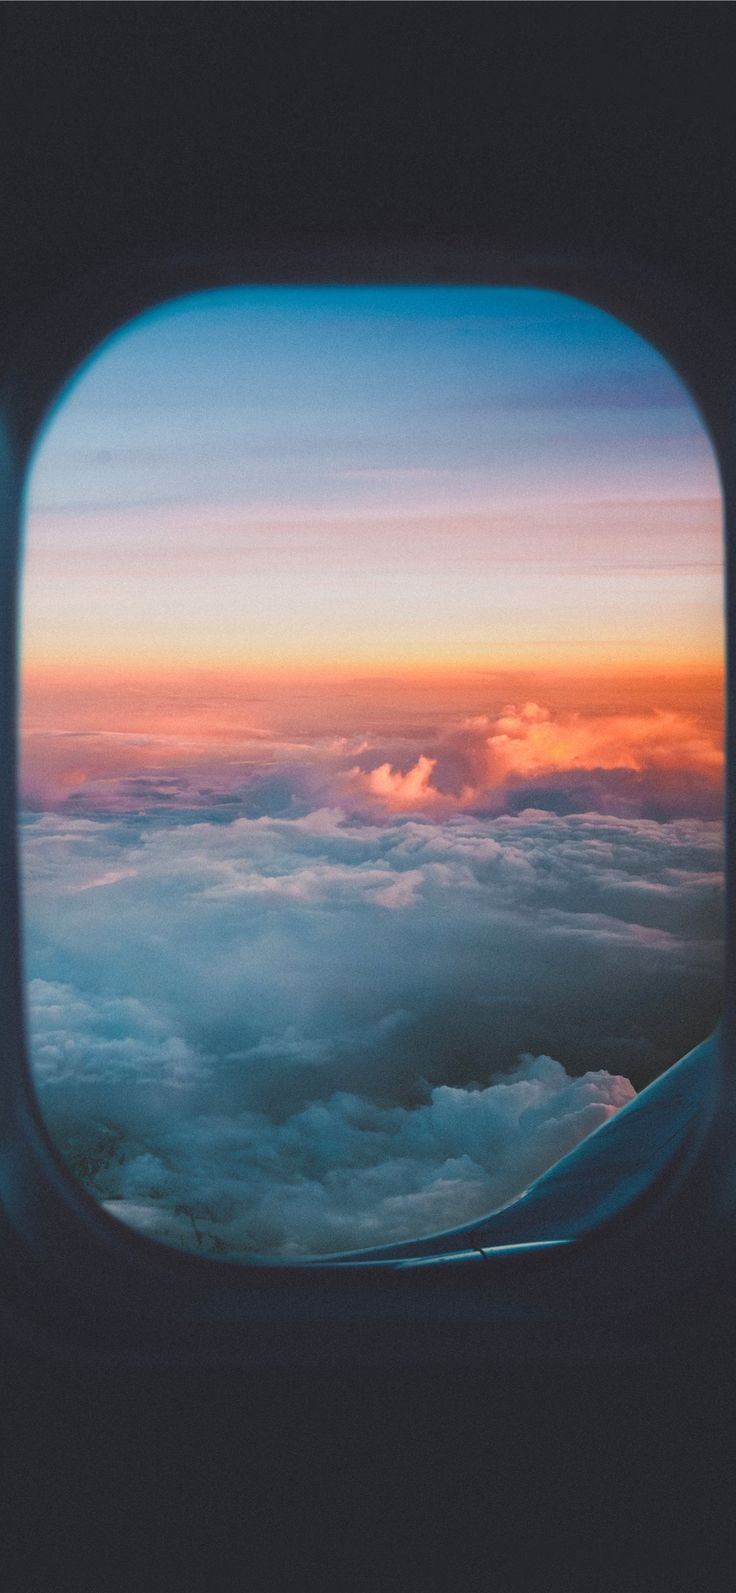 Clouds From Plane Window - HD Wallpaper 